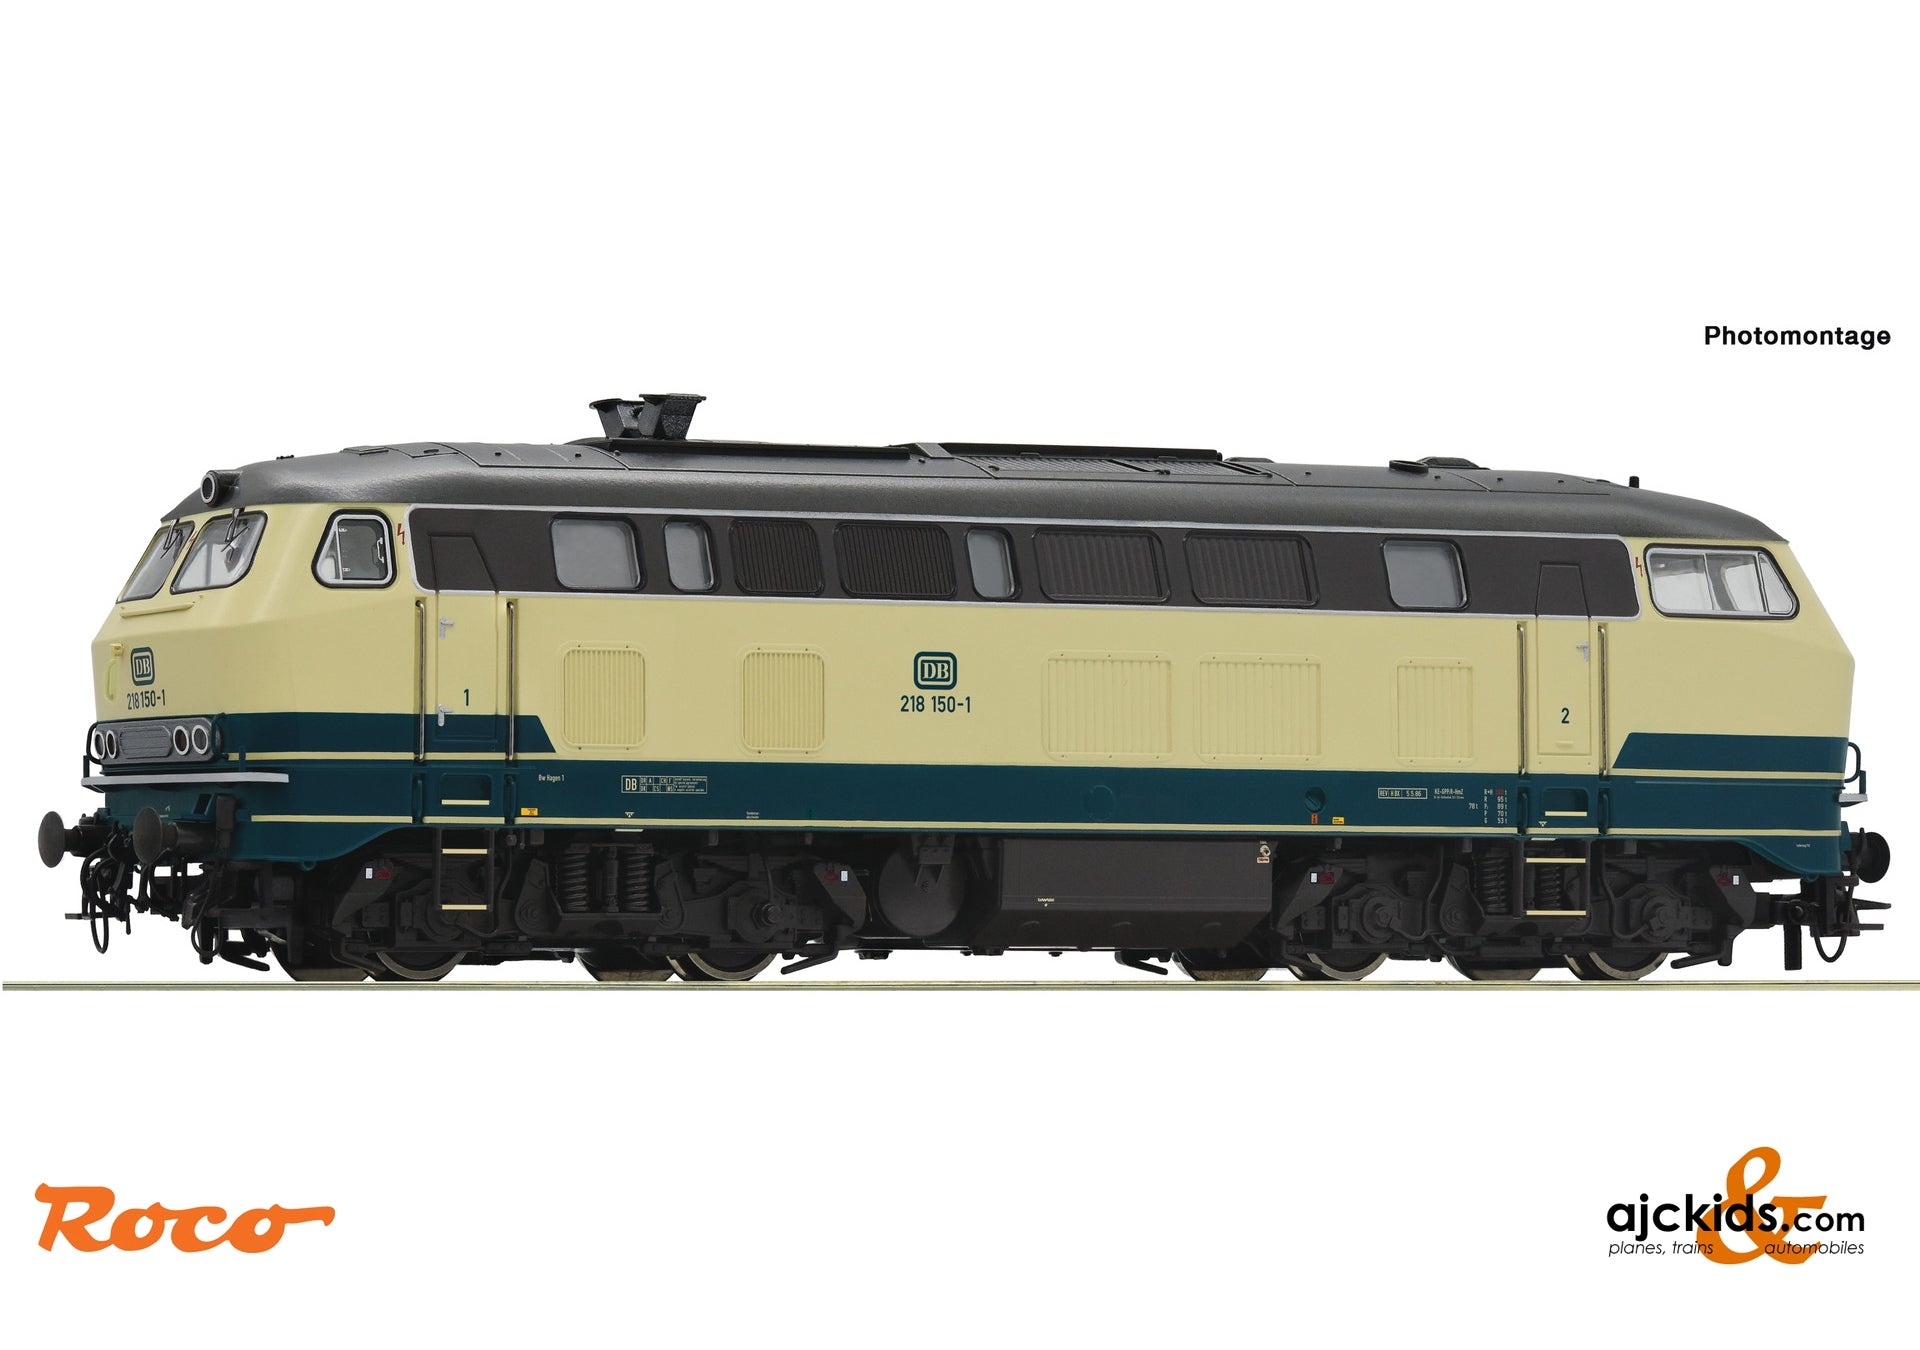 Roco 7310010 - Diesel locomotive 218 150-1, DB at Ajckids.com